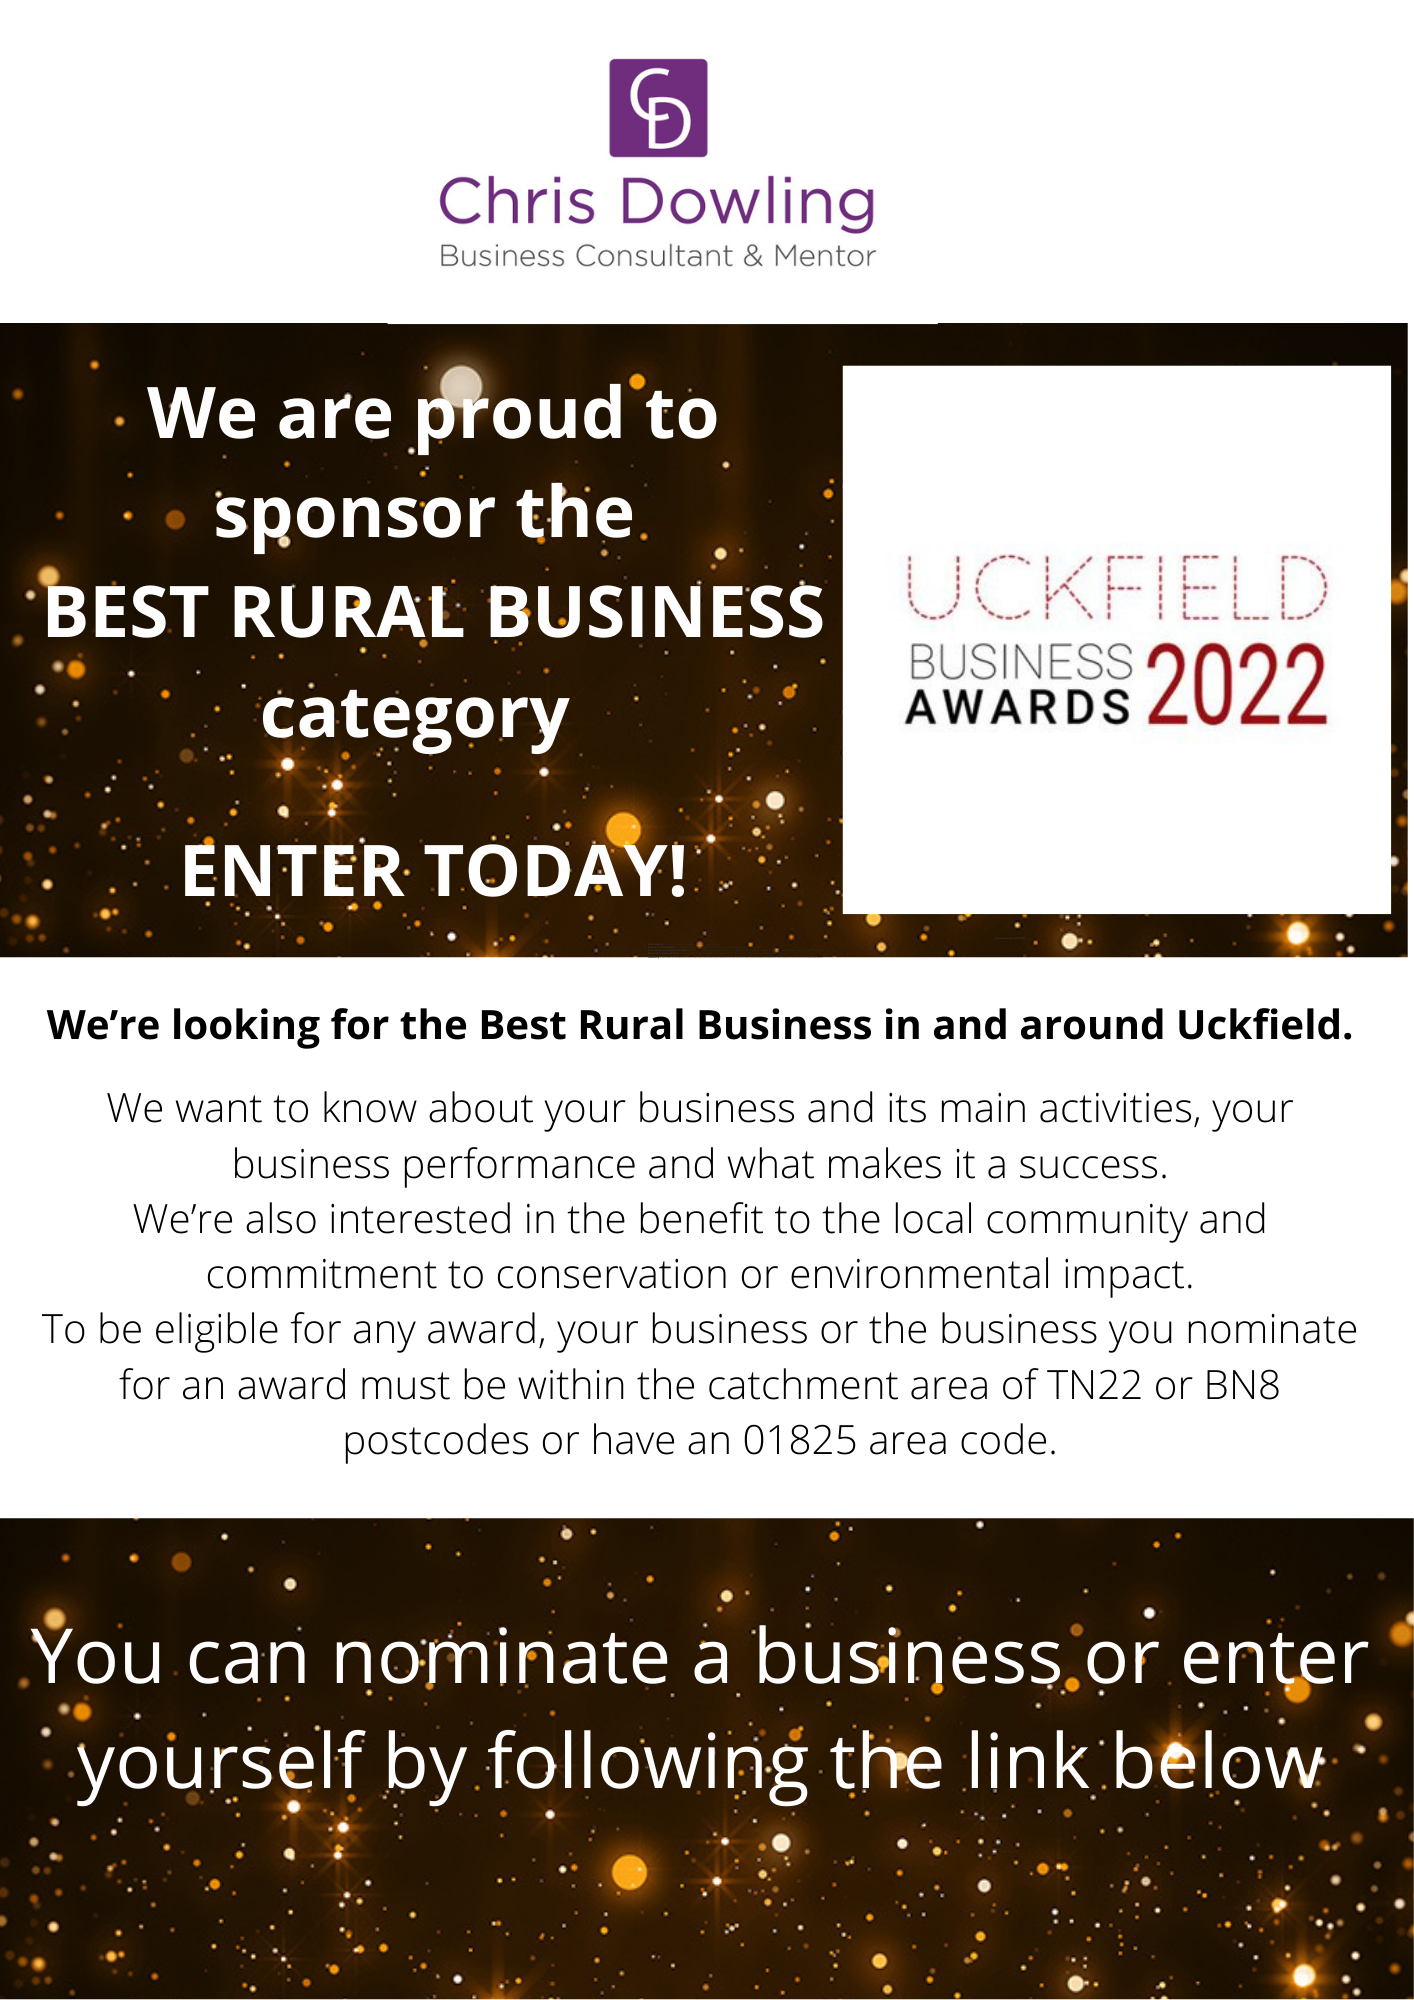 Uckfield business awards